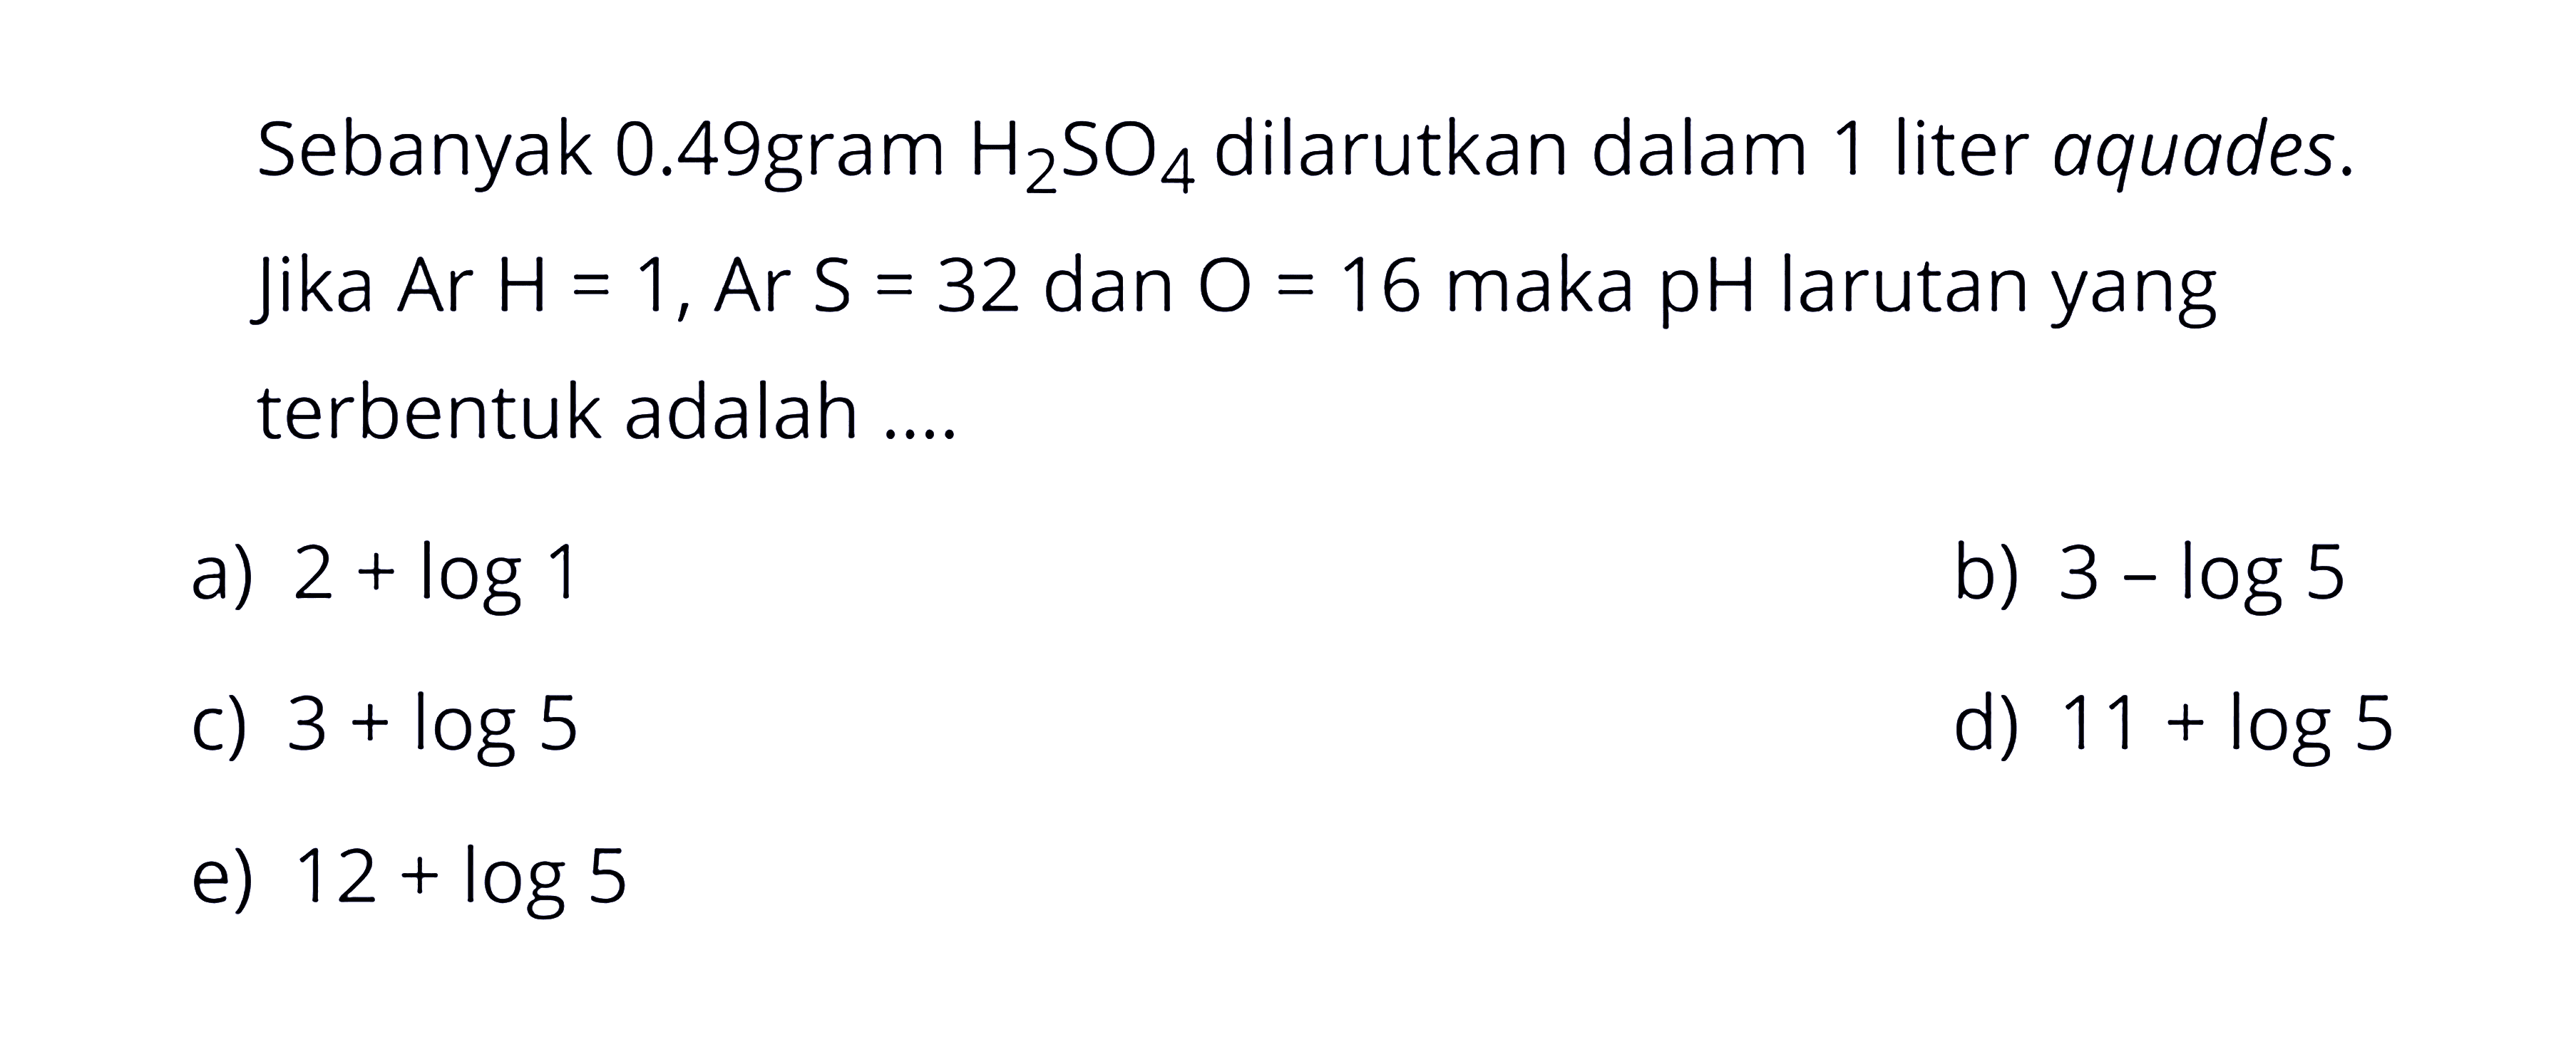 Sebanyak 0,49 gram H2 SO4 dilarutkan dalam 1 liter aquades. Jika Ar H=1, Ar S=32 dan O=16 maka pH larutan yang terbentuk adalah ....